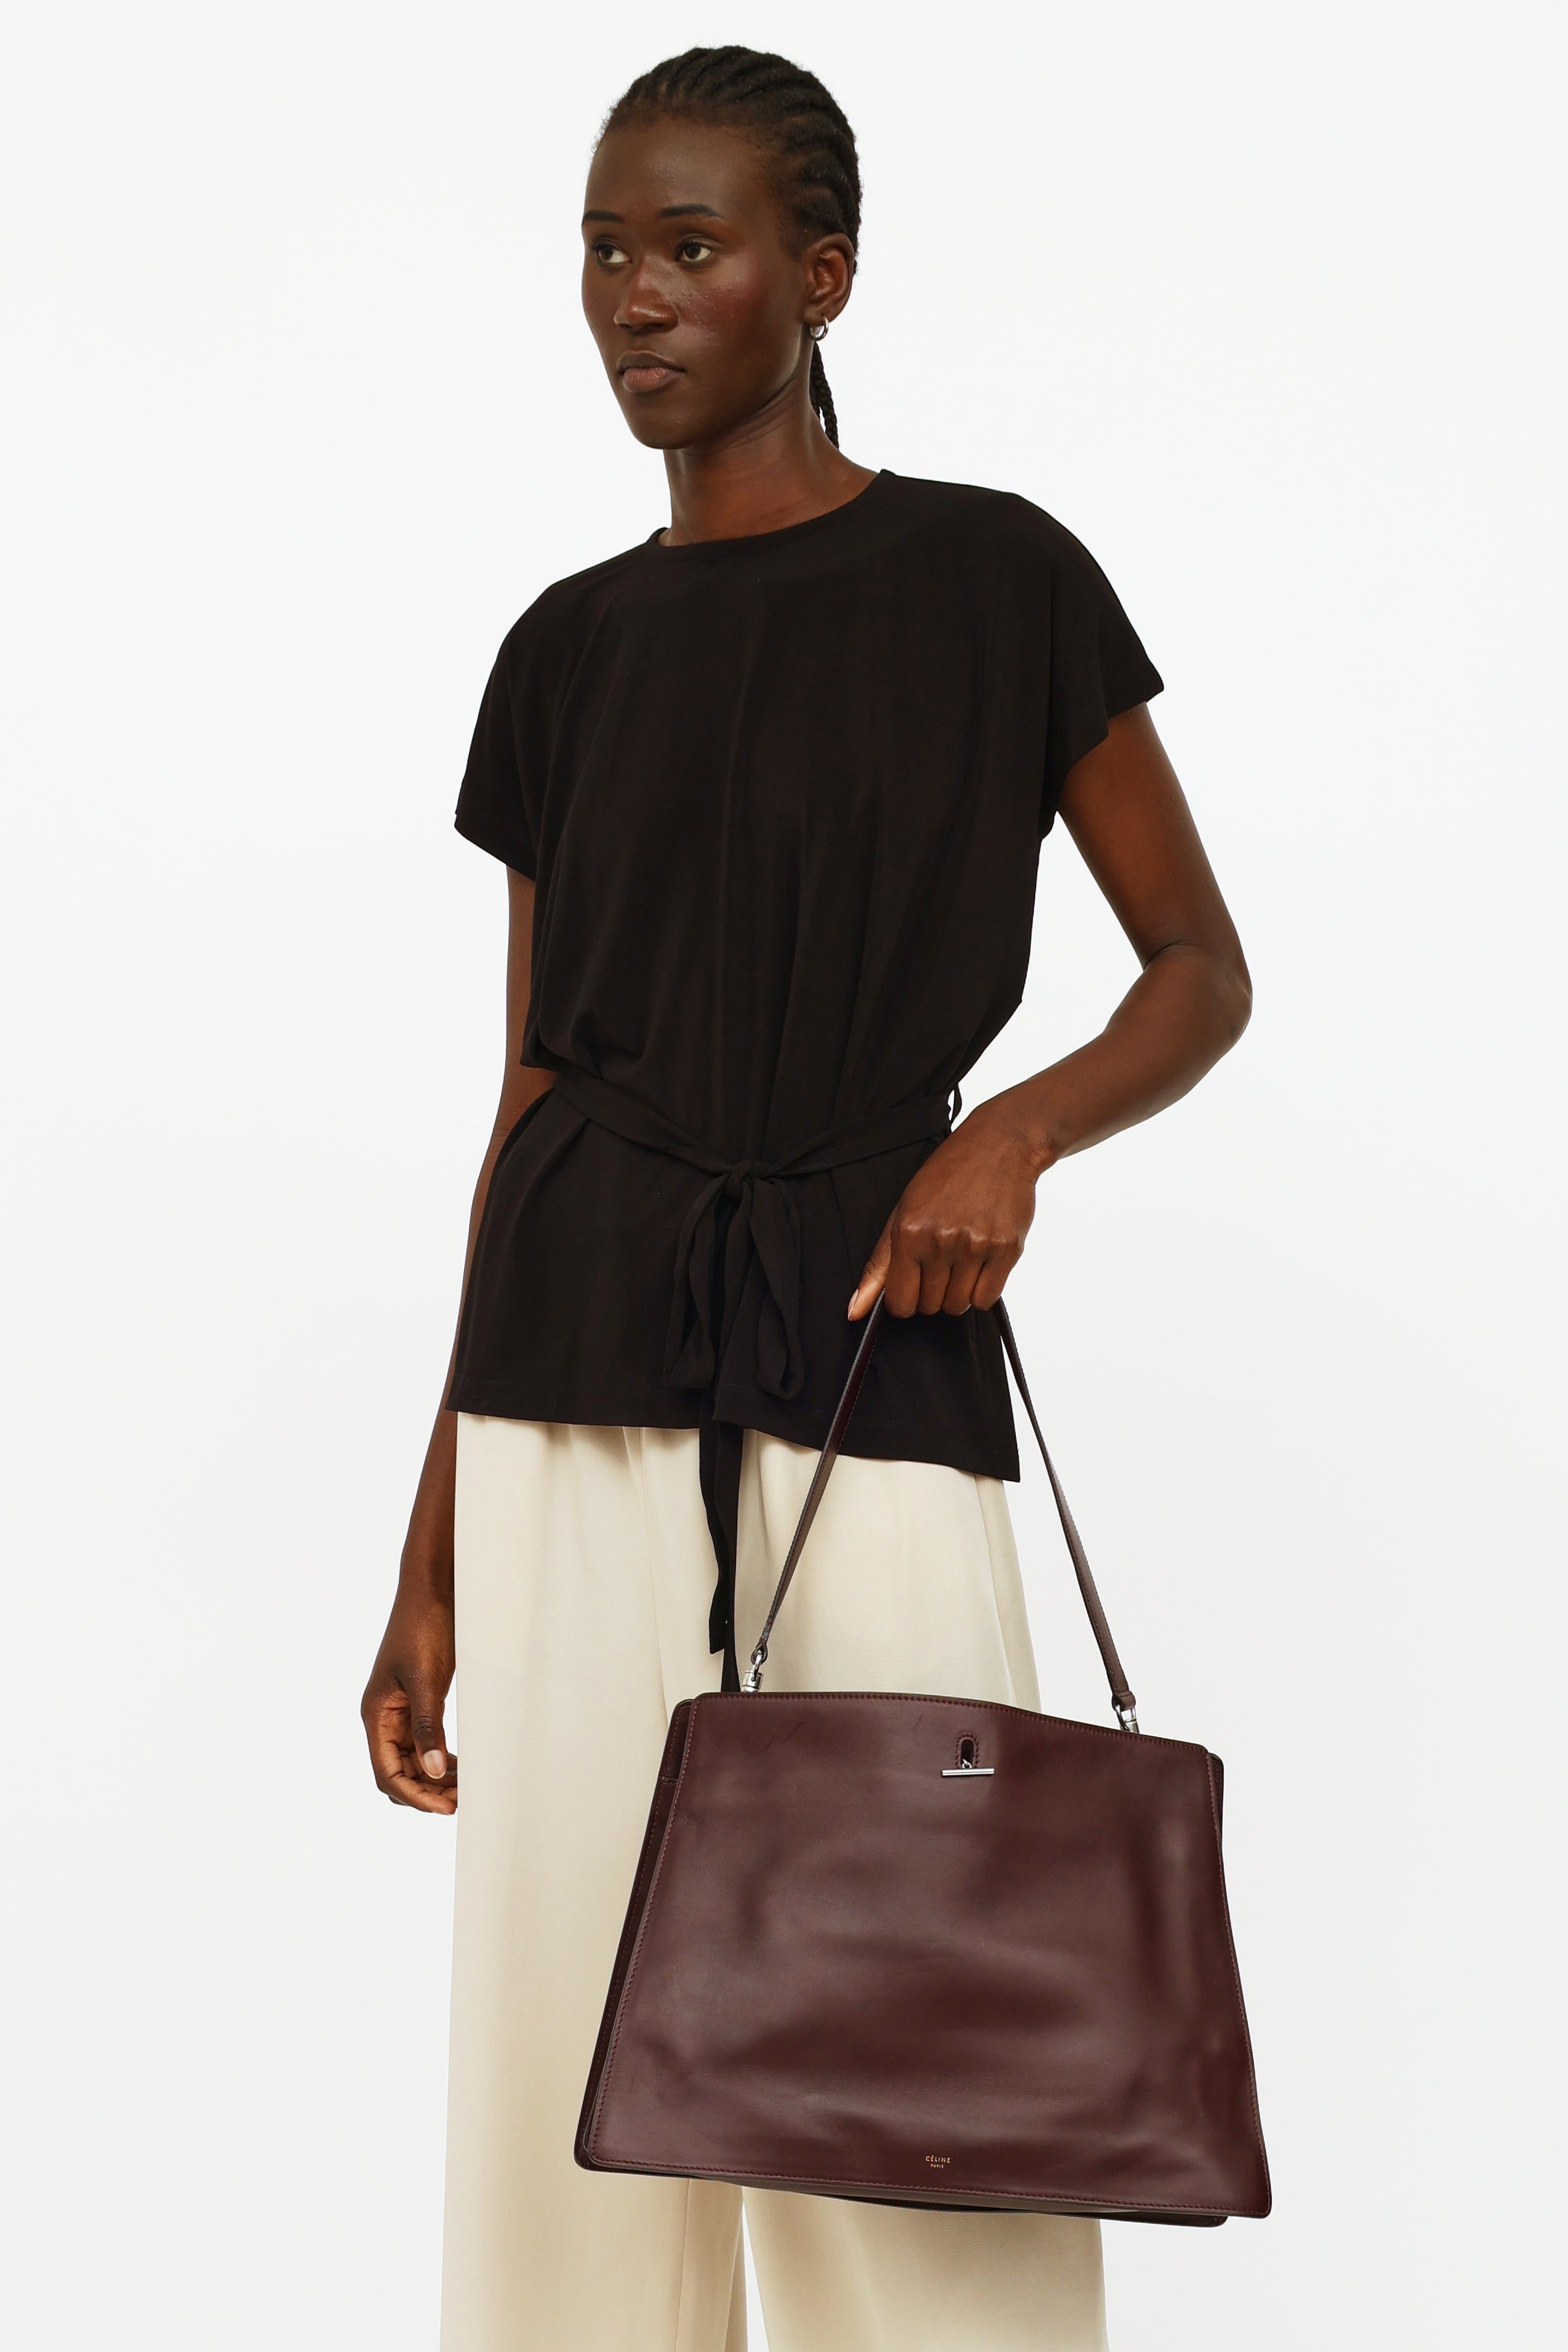 Celine Besace Leather Crossbody Bag in Burgundy - ShopStyle